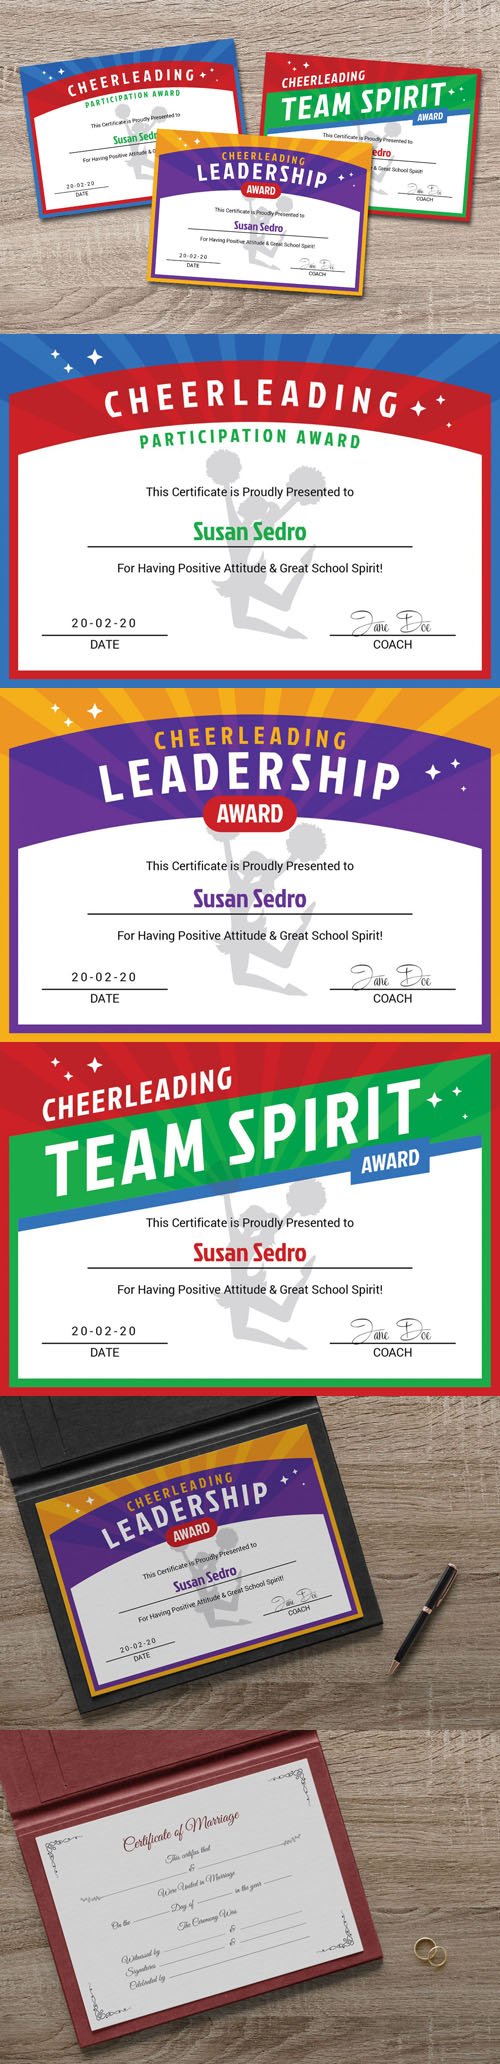 Cheerleader Award Certificate & Wedding Card Design Templates